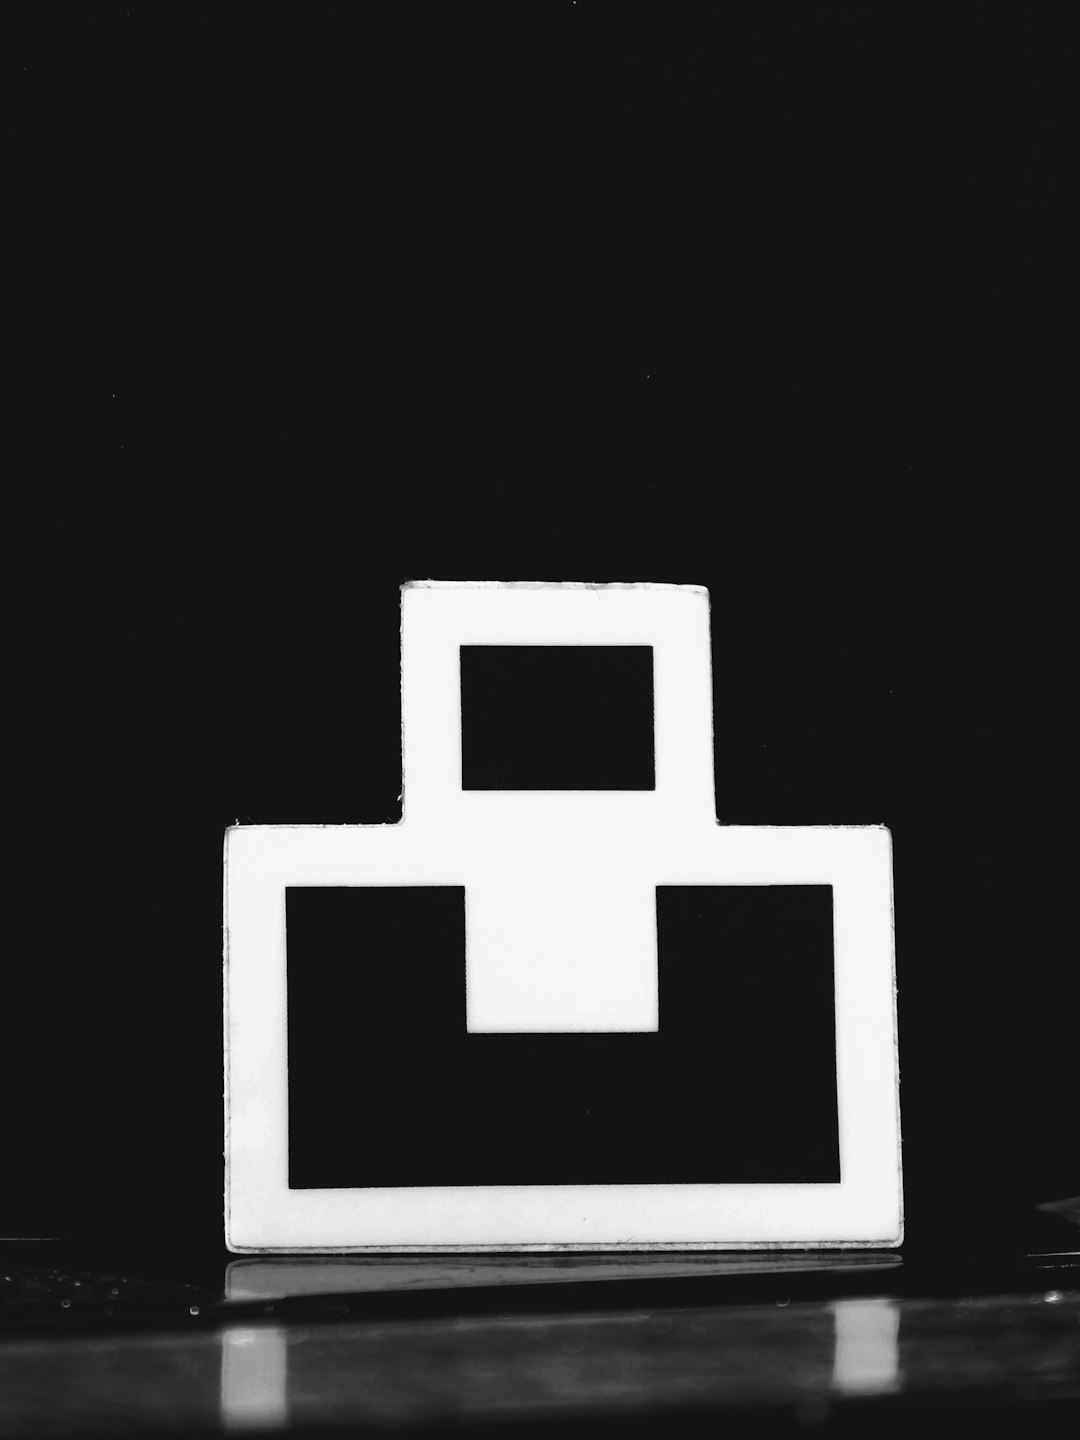 black and white x logo